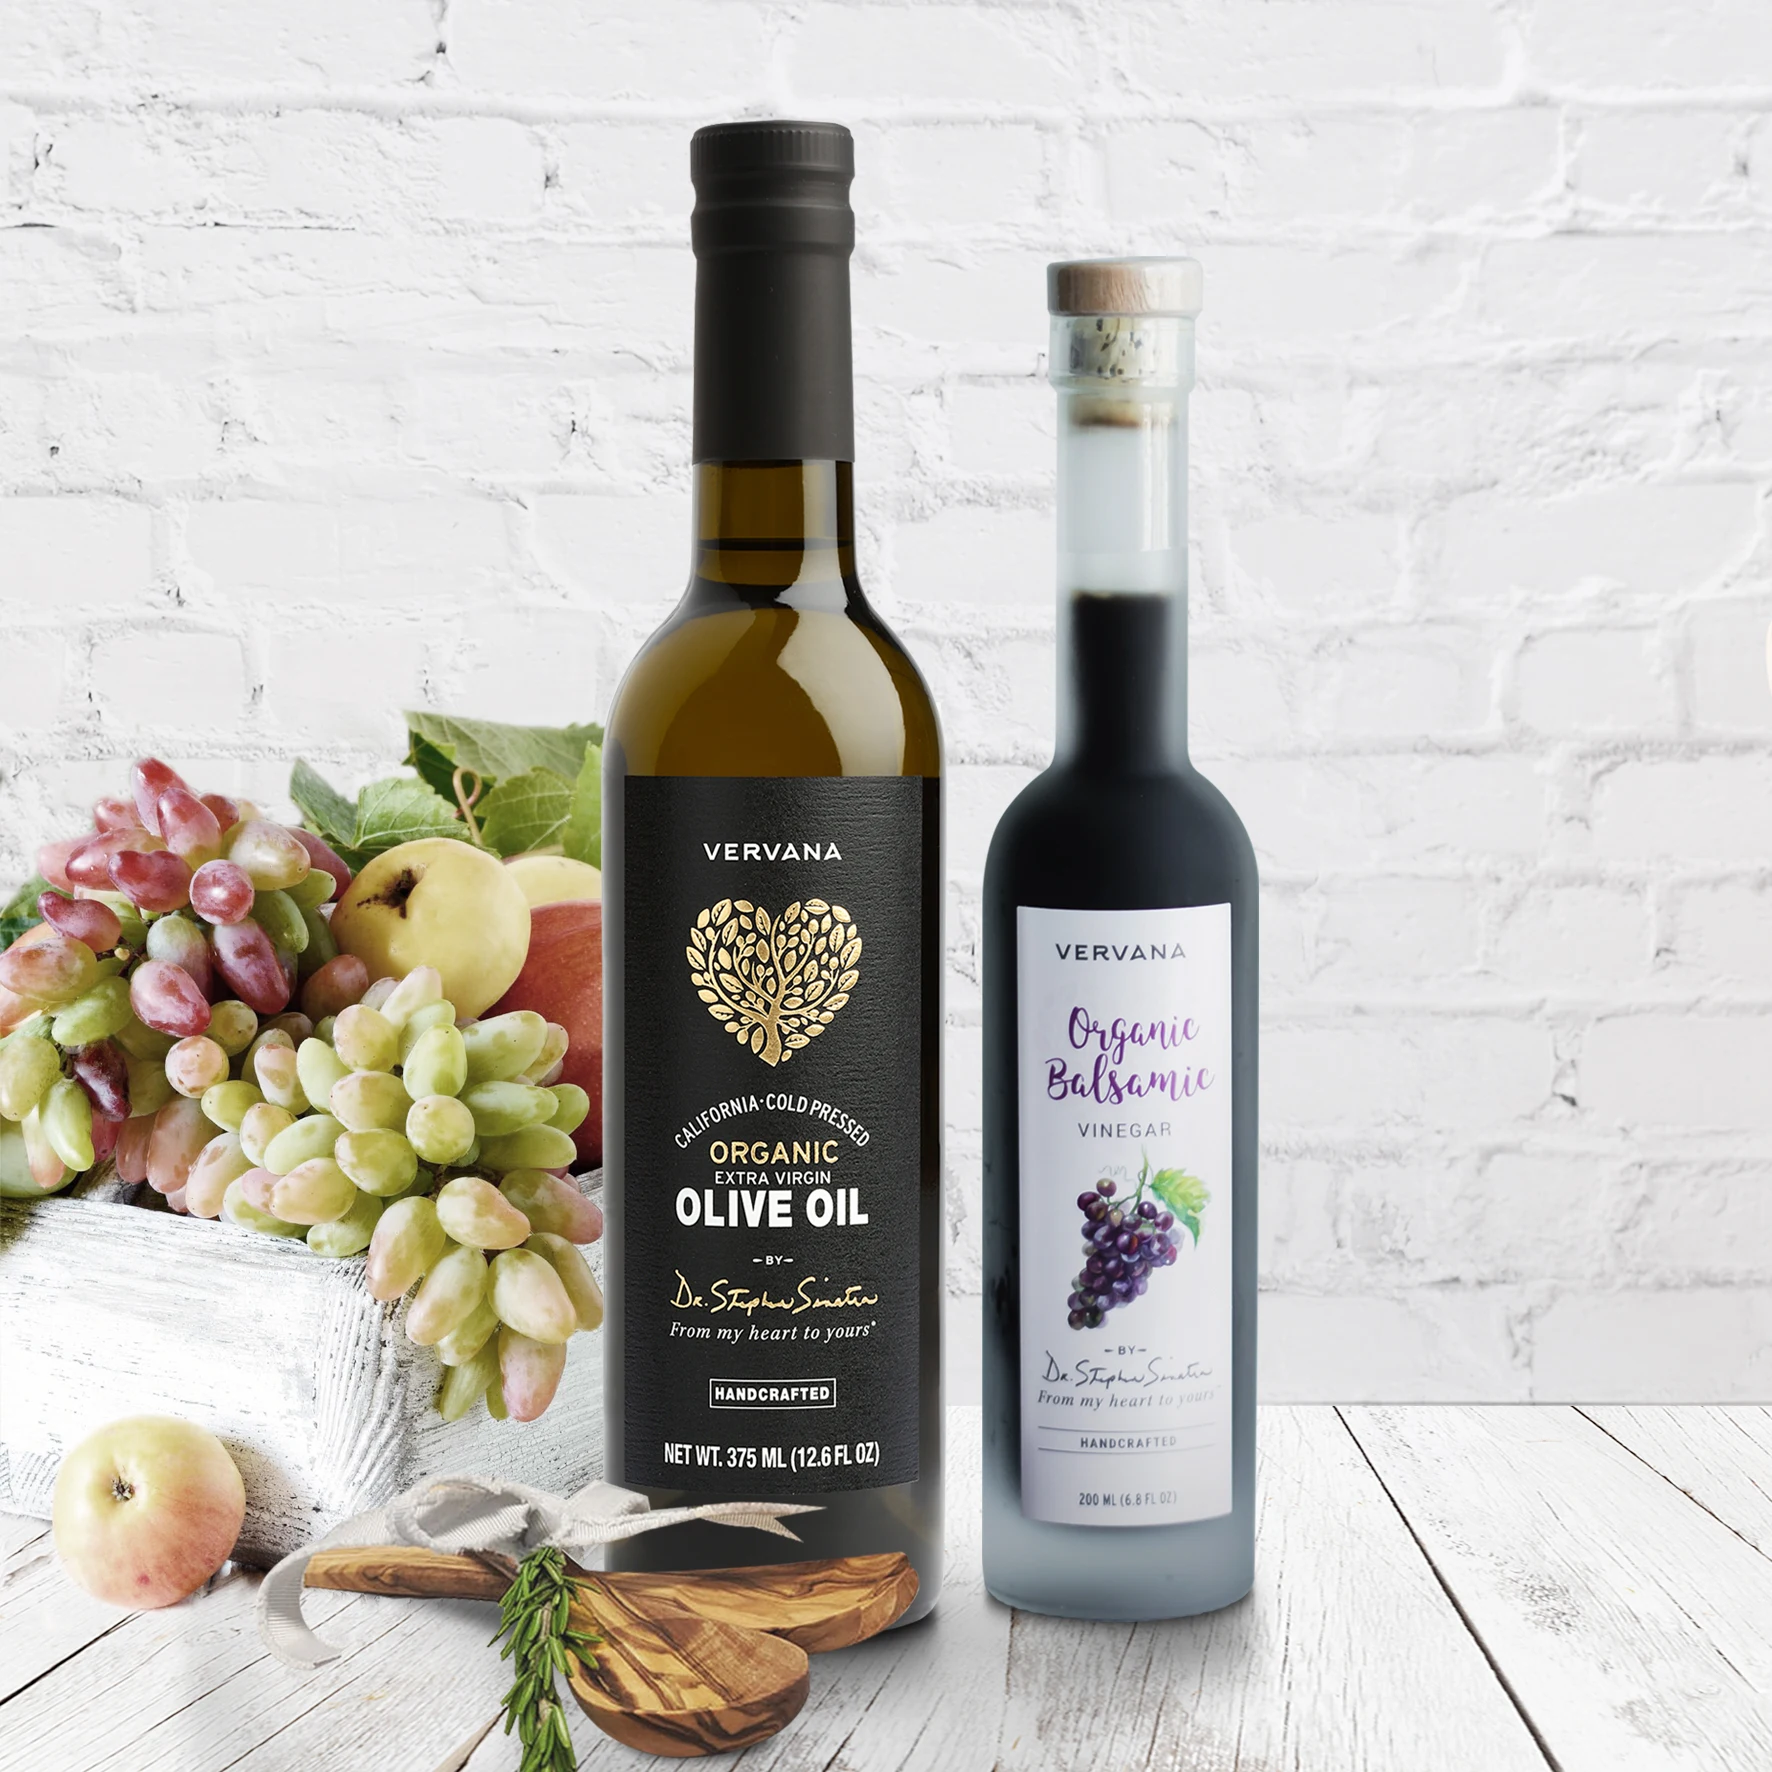 Vervana Gift Set with Organic Extra Virgin Olive Oil (375 ml) & Organic Balsamic Vinegar (200 ml) and Olivewood Serving Utensils